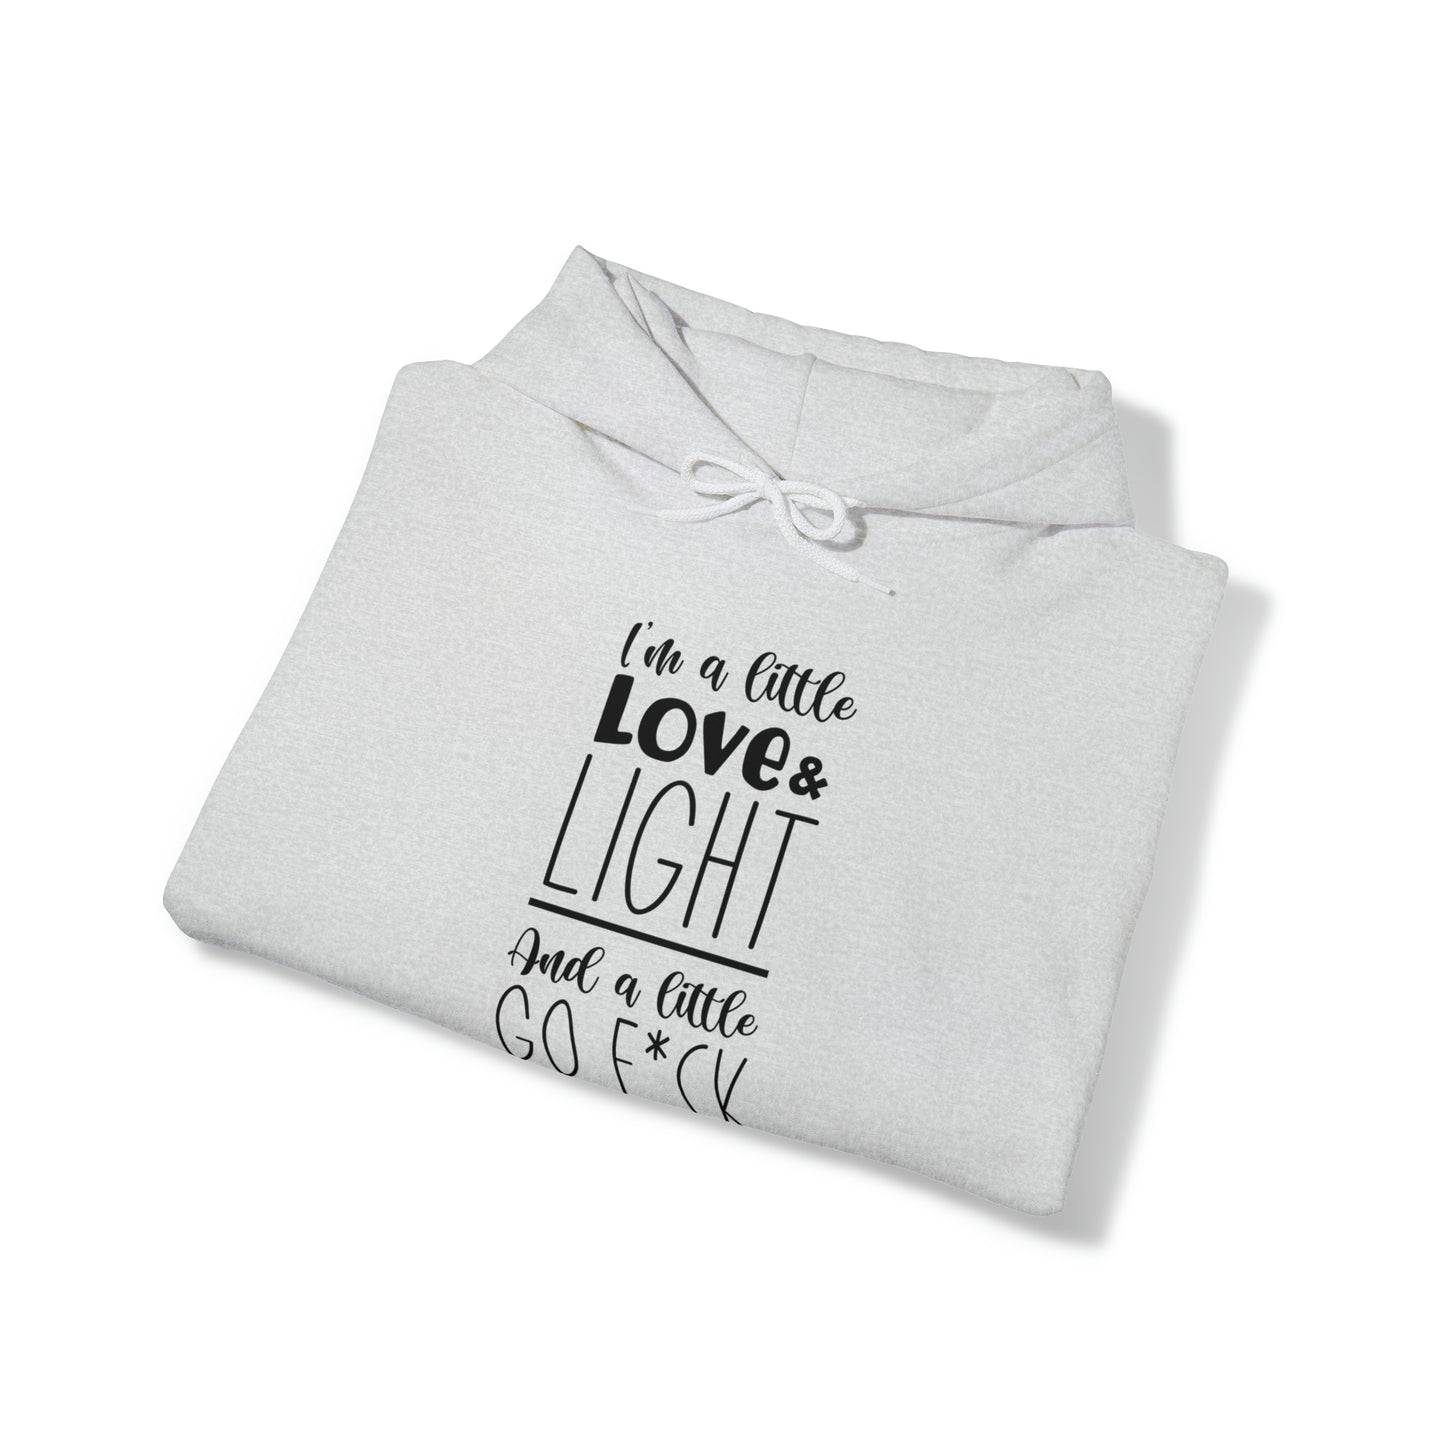 A Little Love and Light Hooded Sweatshirt